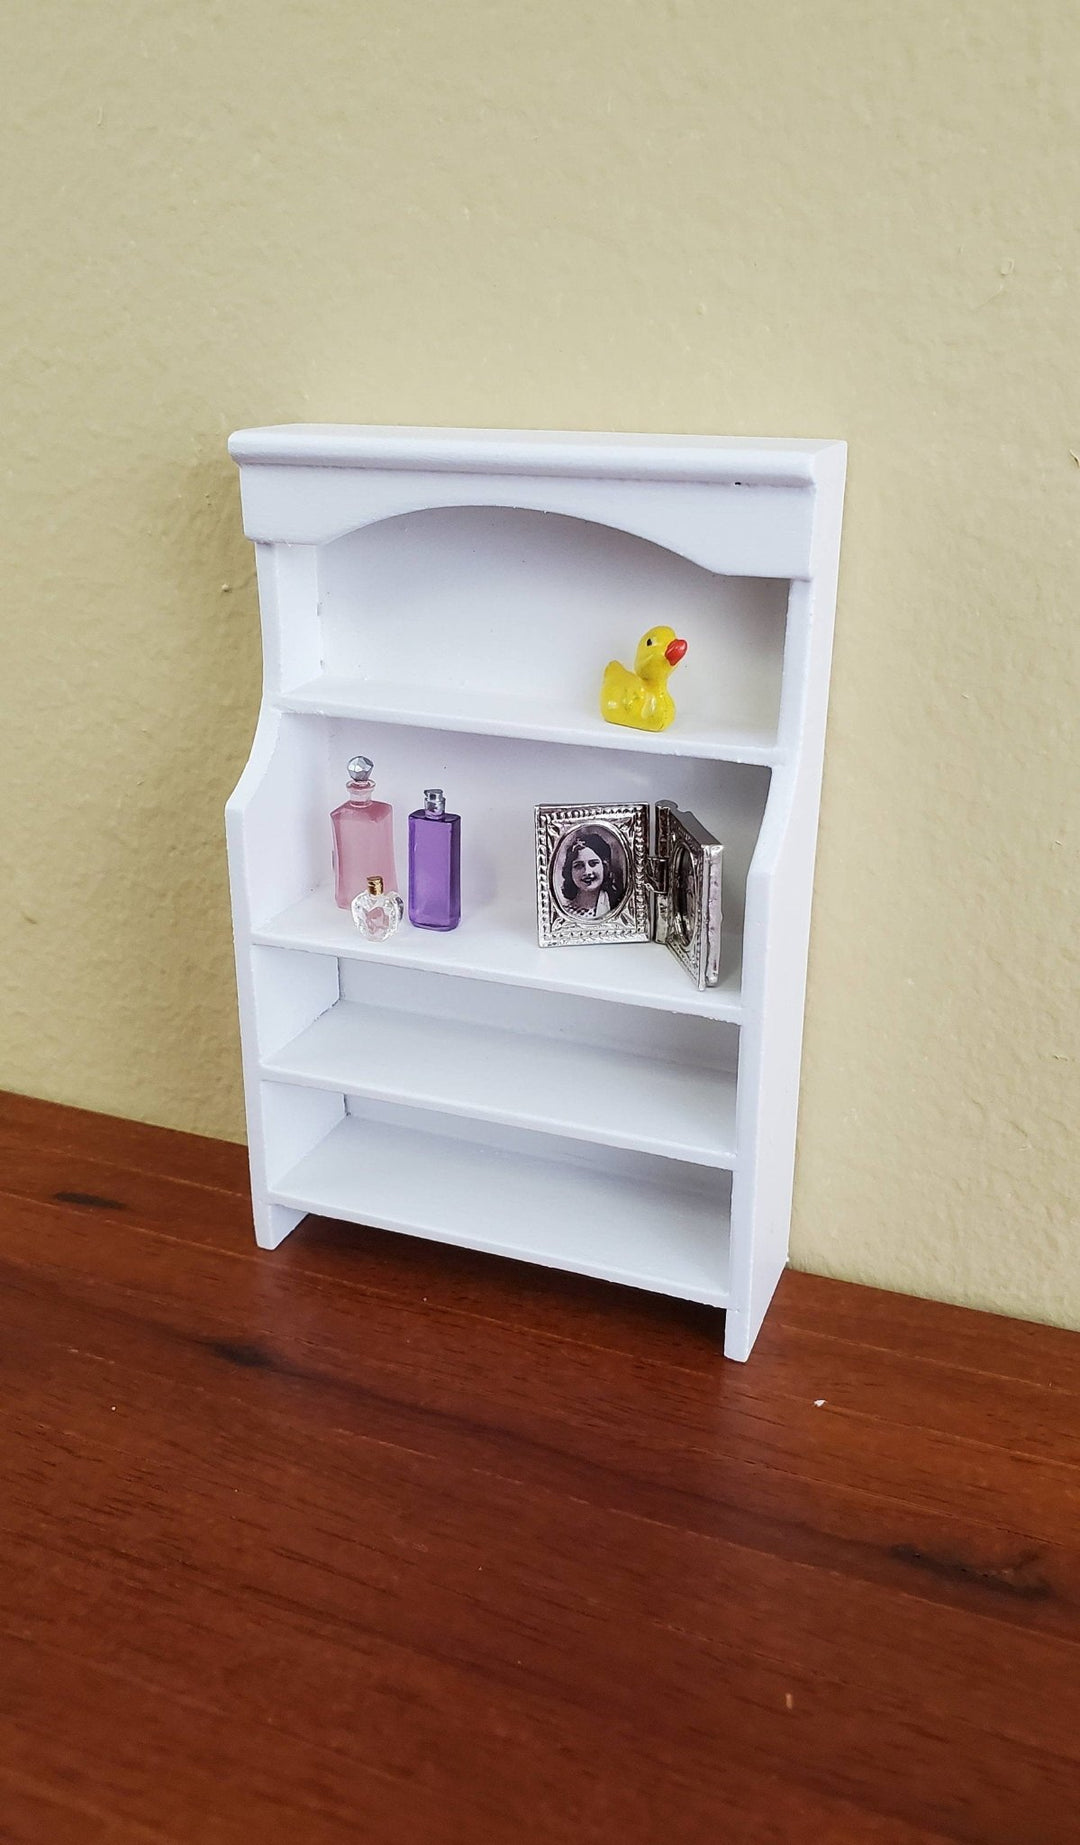 Dollhouse Miniature Bathroom Shelf or Toy Cabinet White Small 1:12 Scale Furniture - Miniature Crush